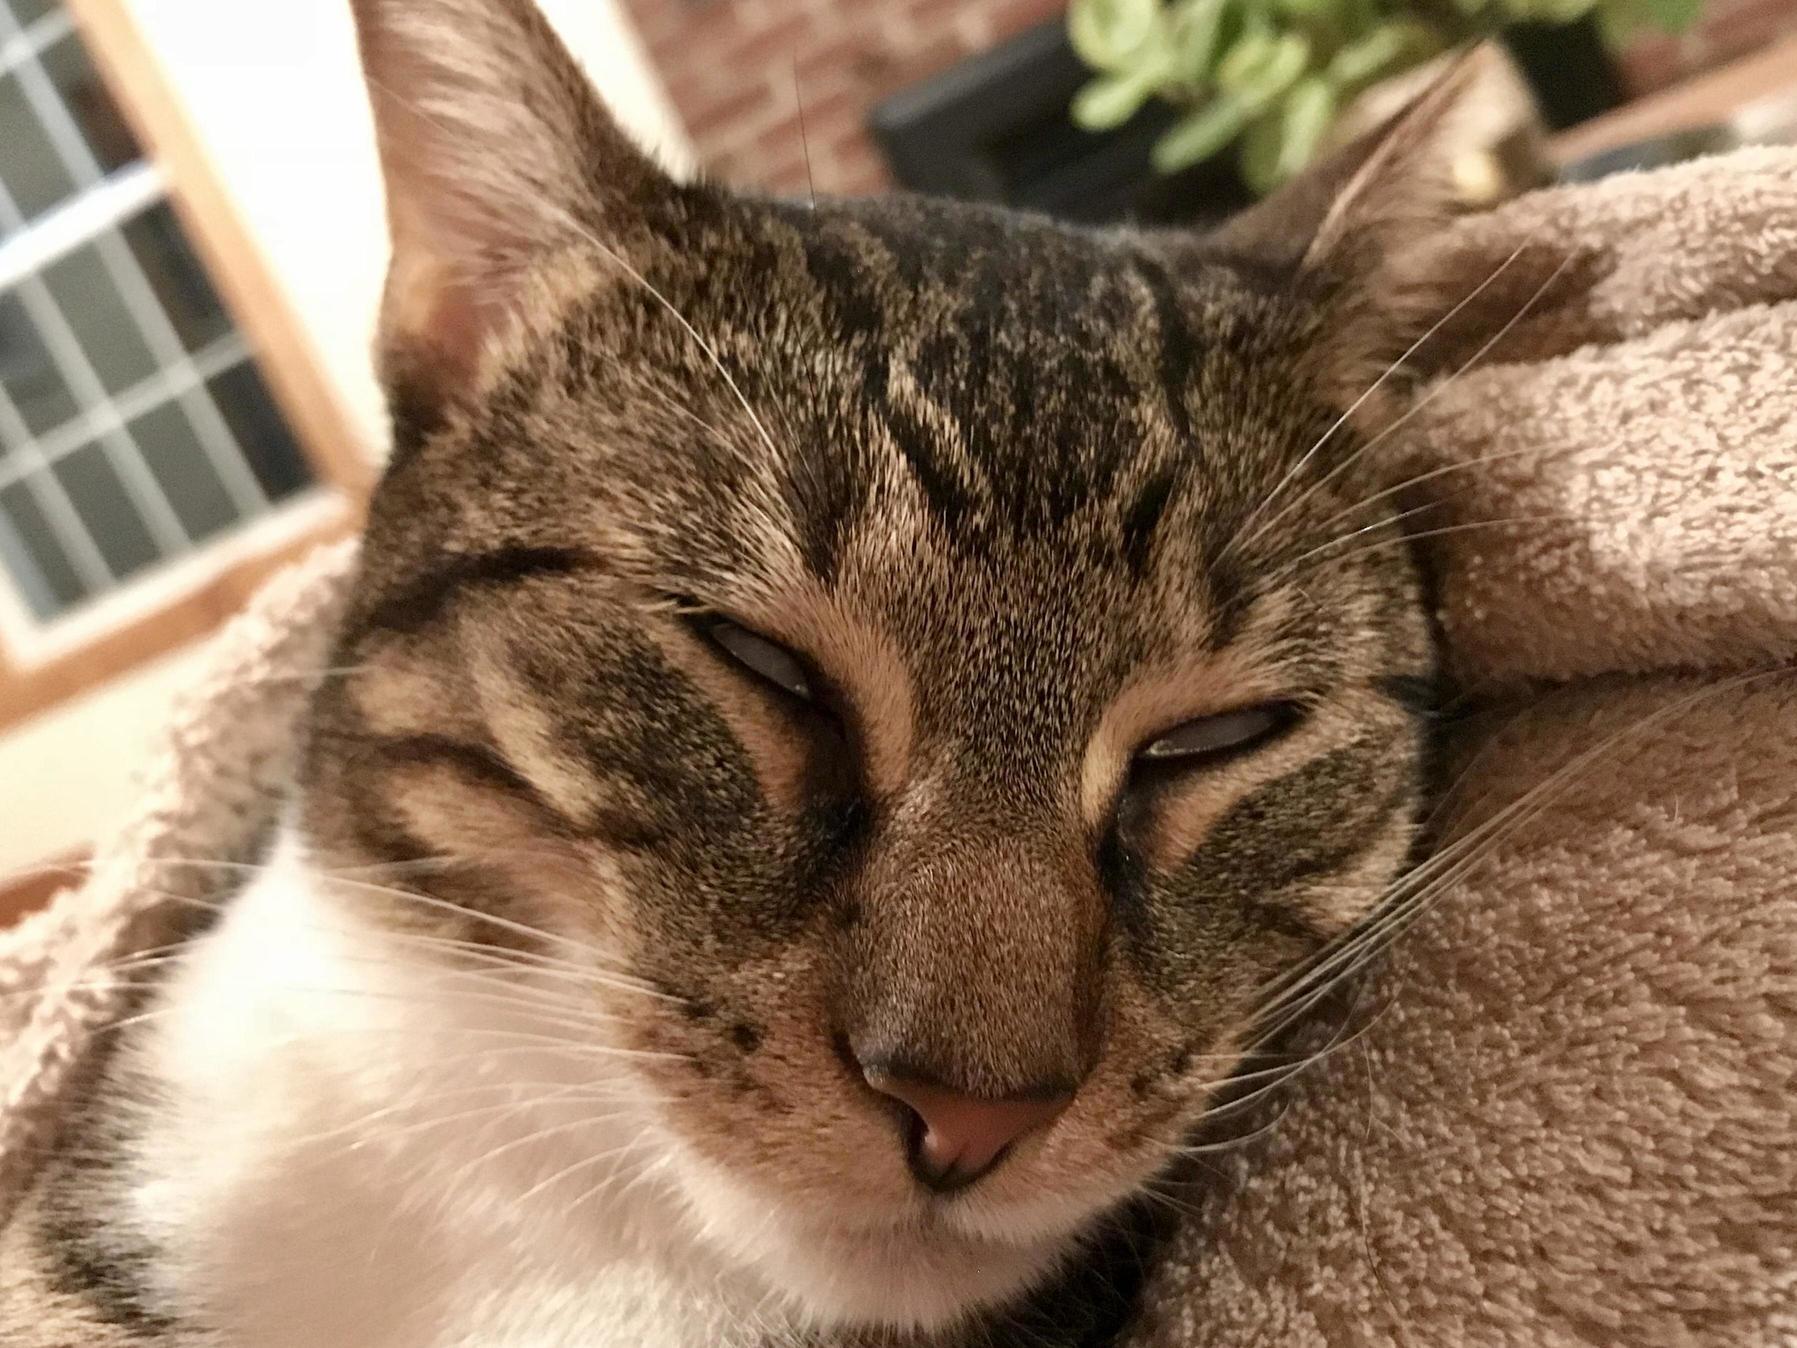 My cat dreaming!